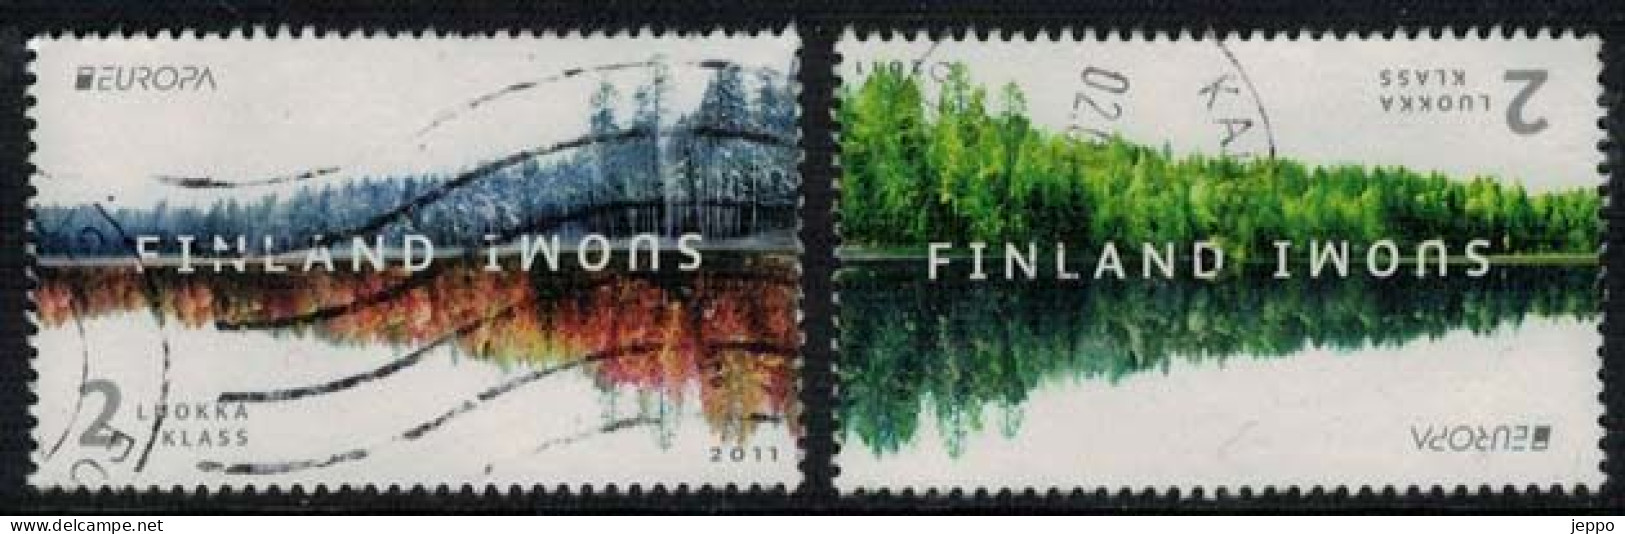 2011 Finland, Europa Cept Forrest Used Set. - Oblitérés